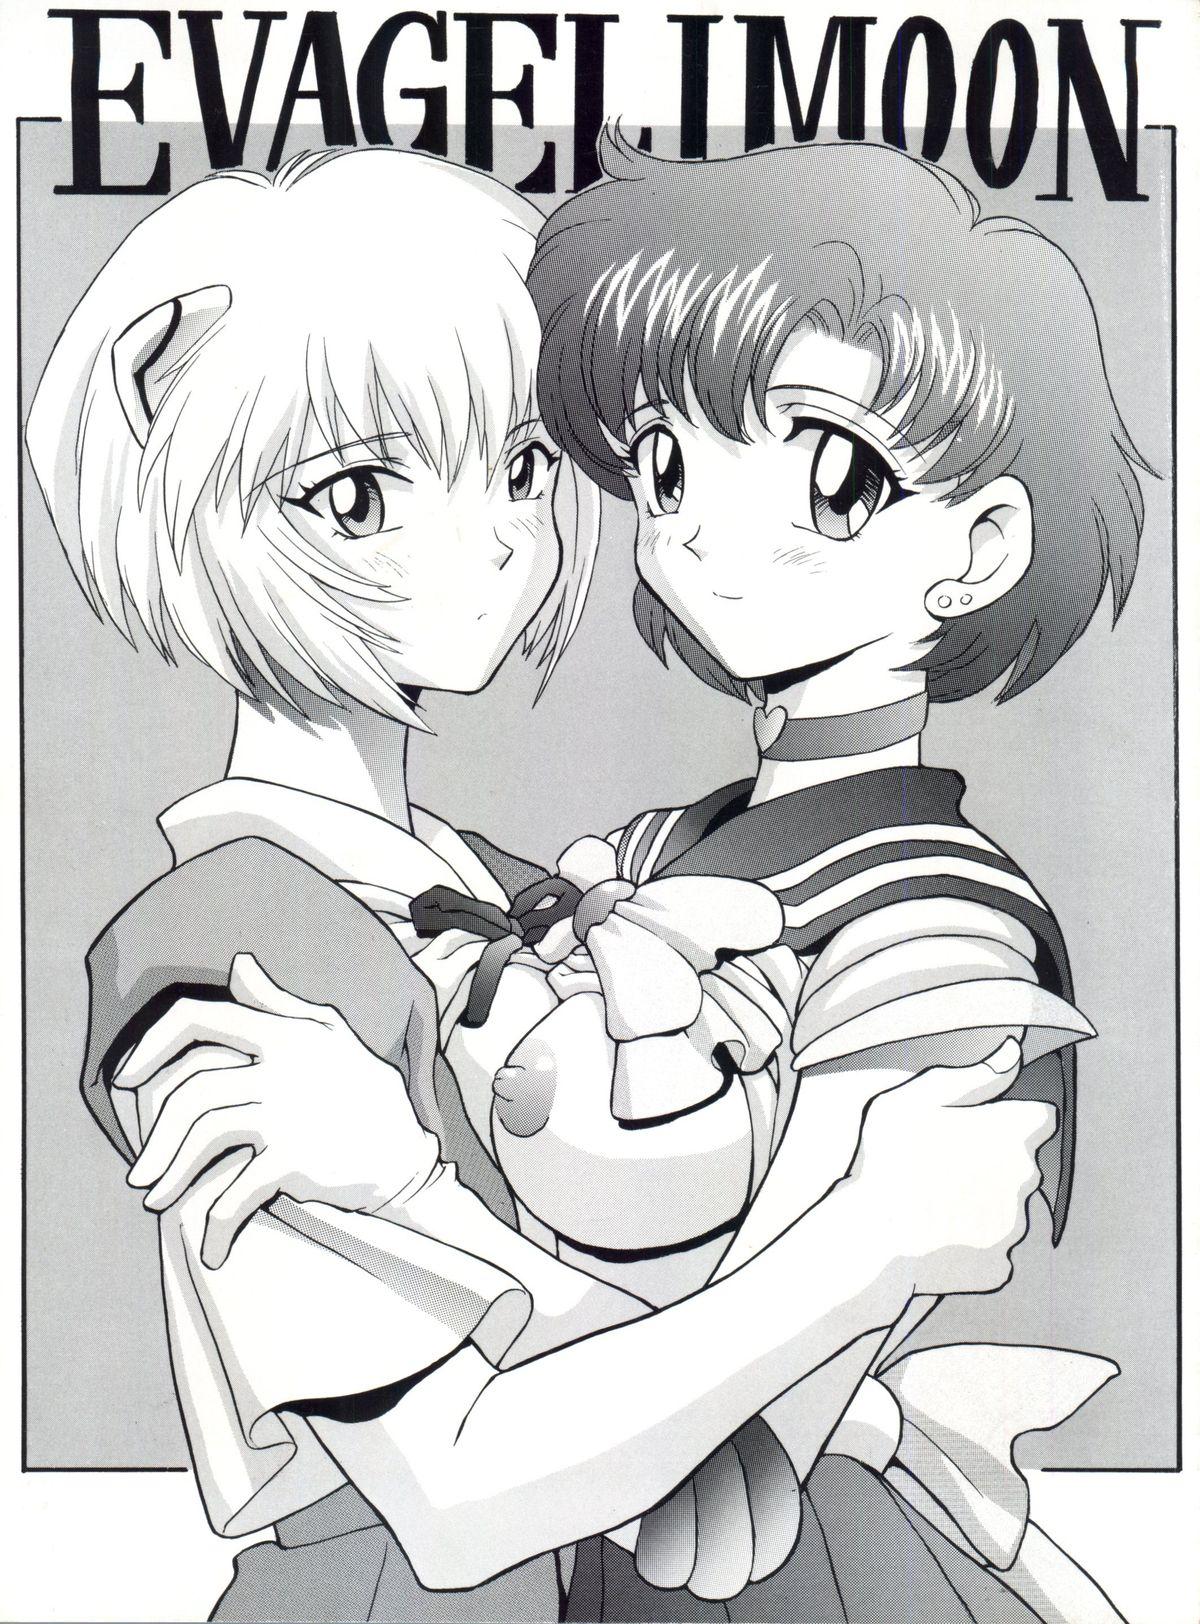 The Evagelimoon - Neon genesis evangelion Sailor moon Bangbros - Picture 1